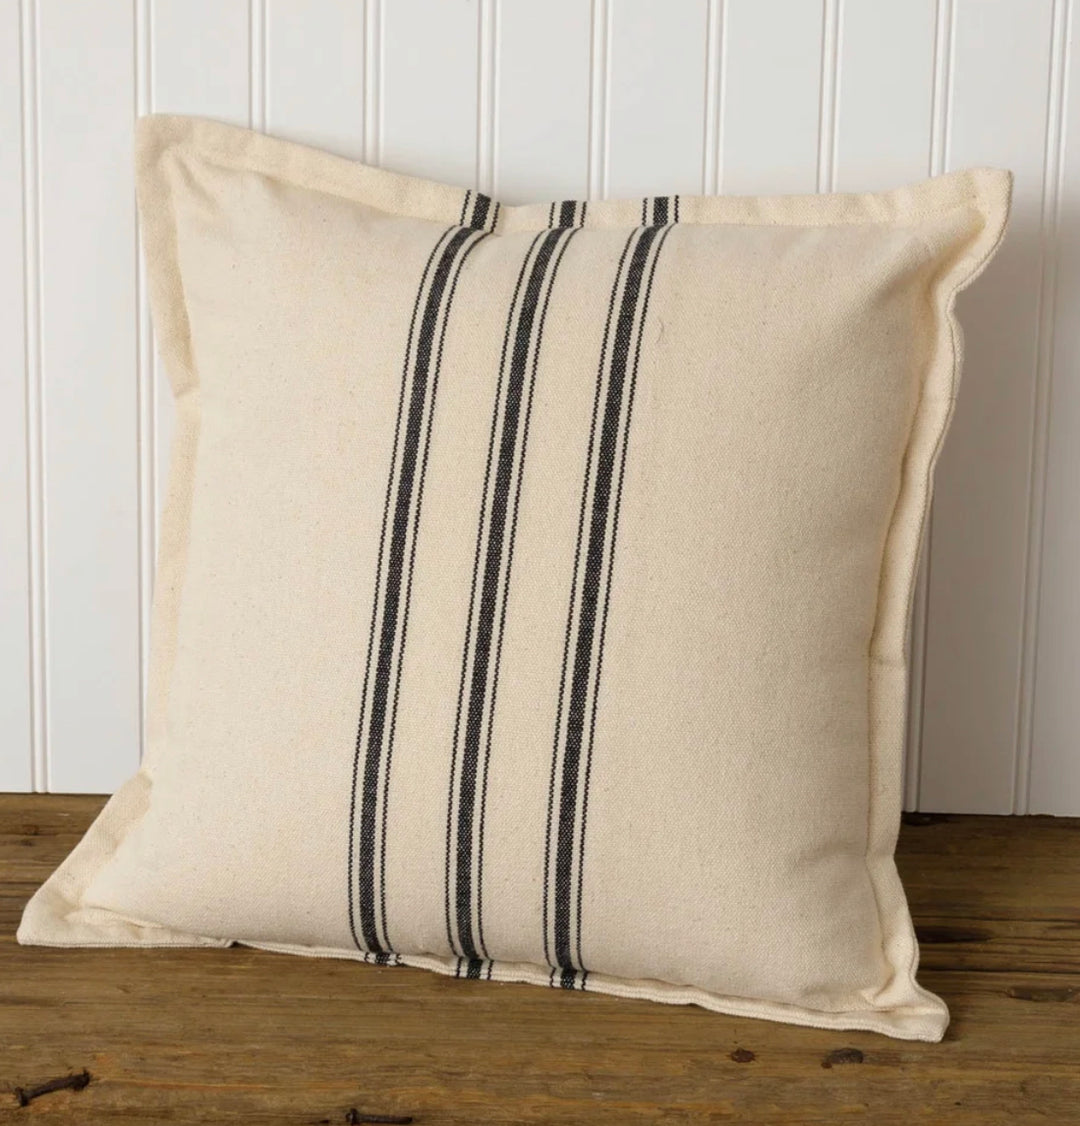 Three Striped Pillow